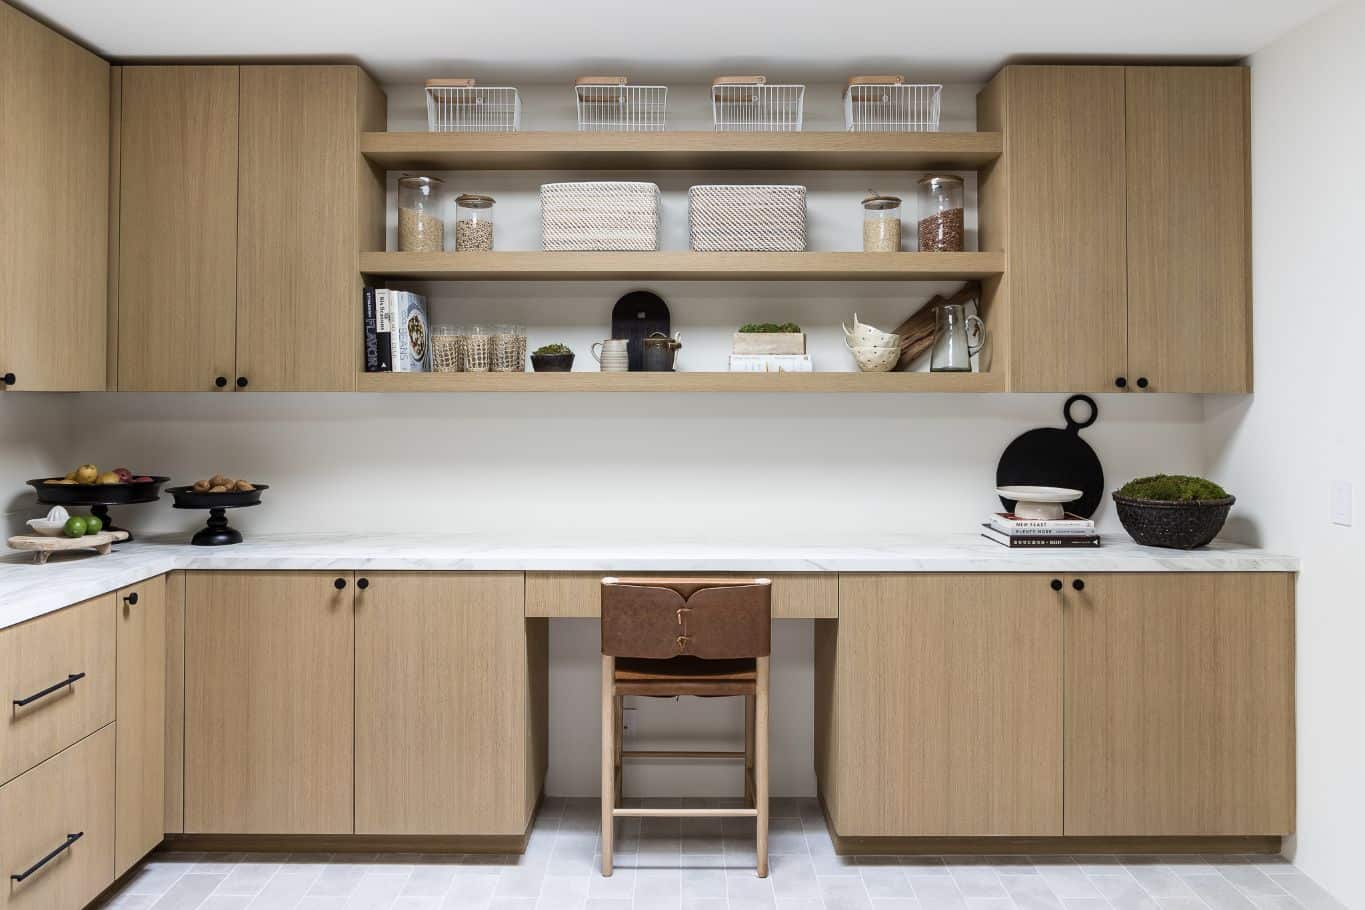 La Jolla Kitchen Design: The Look P.1 - Mindy Gayer Design